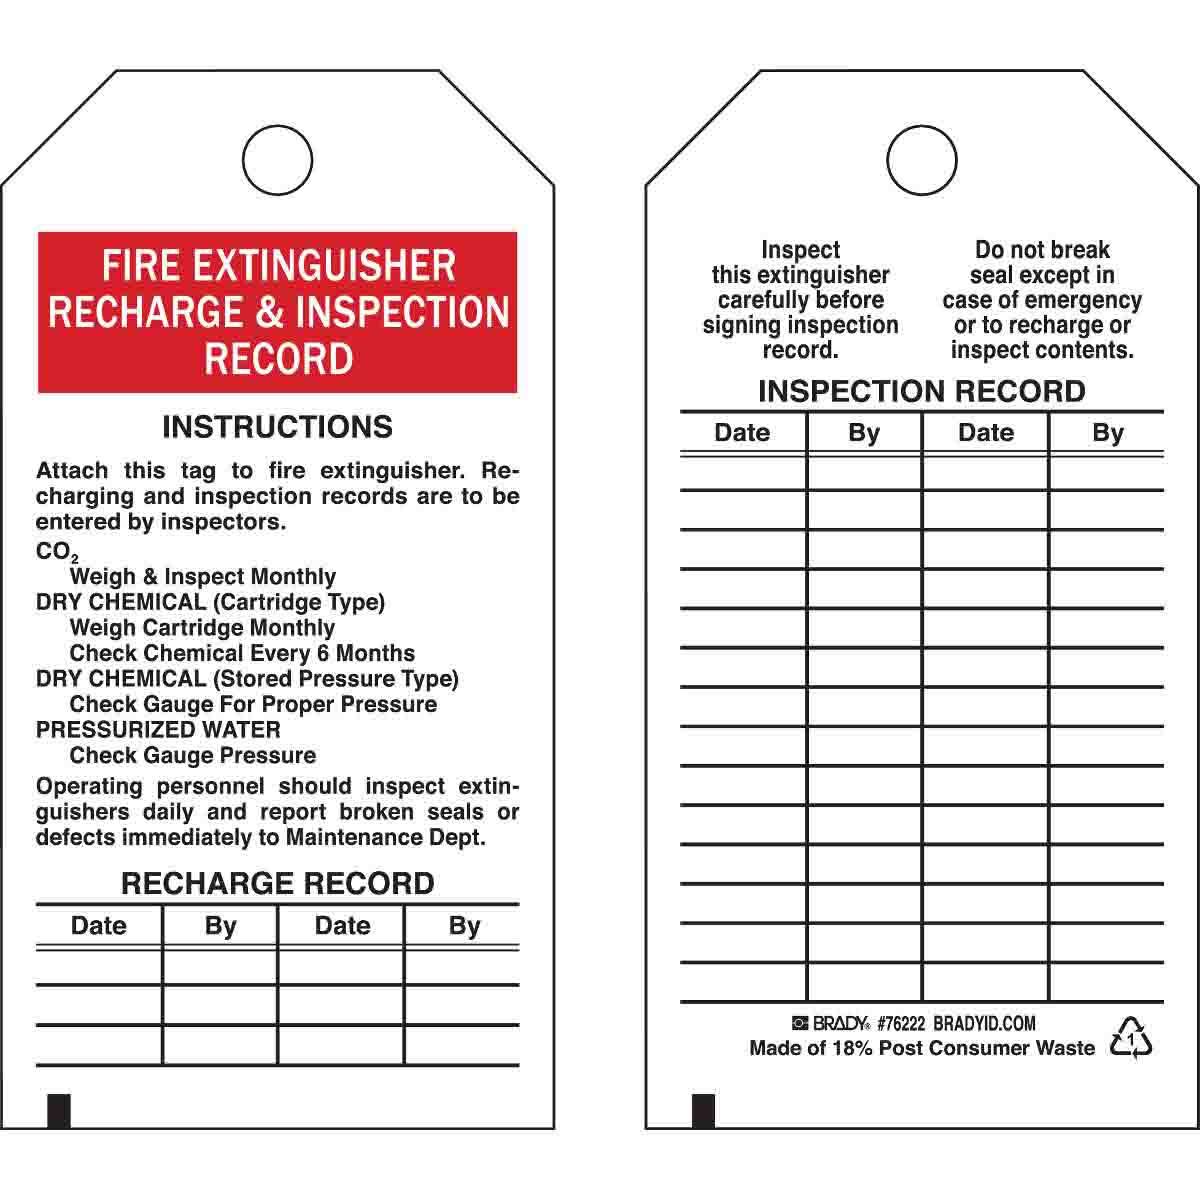 Fire Extinguisher Recharge And Inspection Record Tags Brady Part 76222 Brady Bradycanada Ca